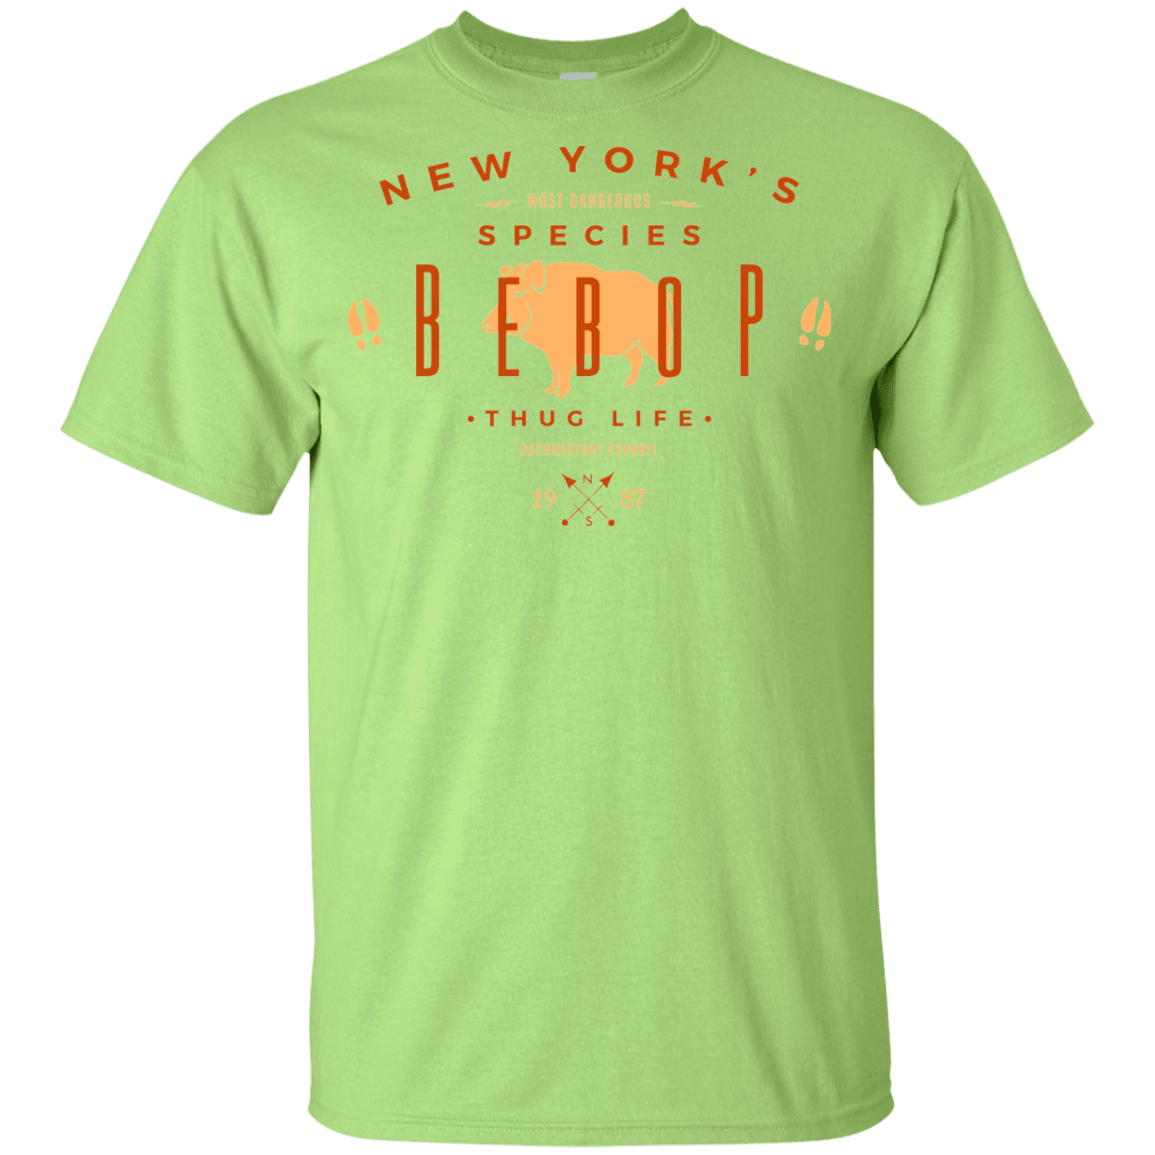 BEBOP Youth T-Shirt